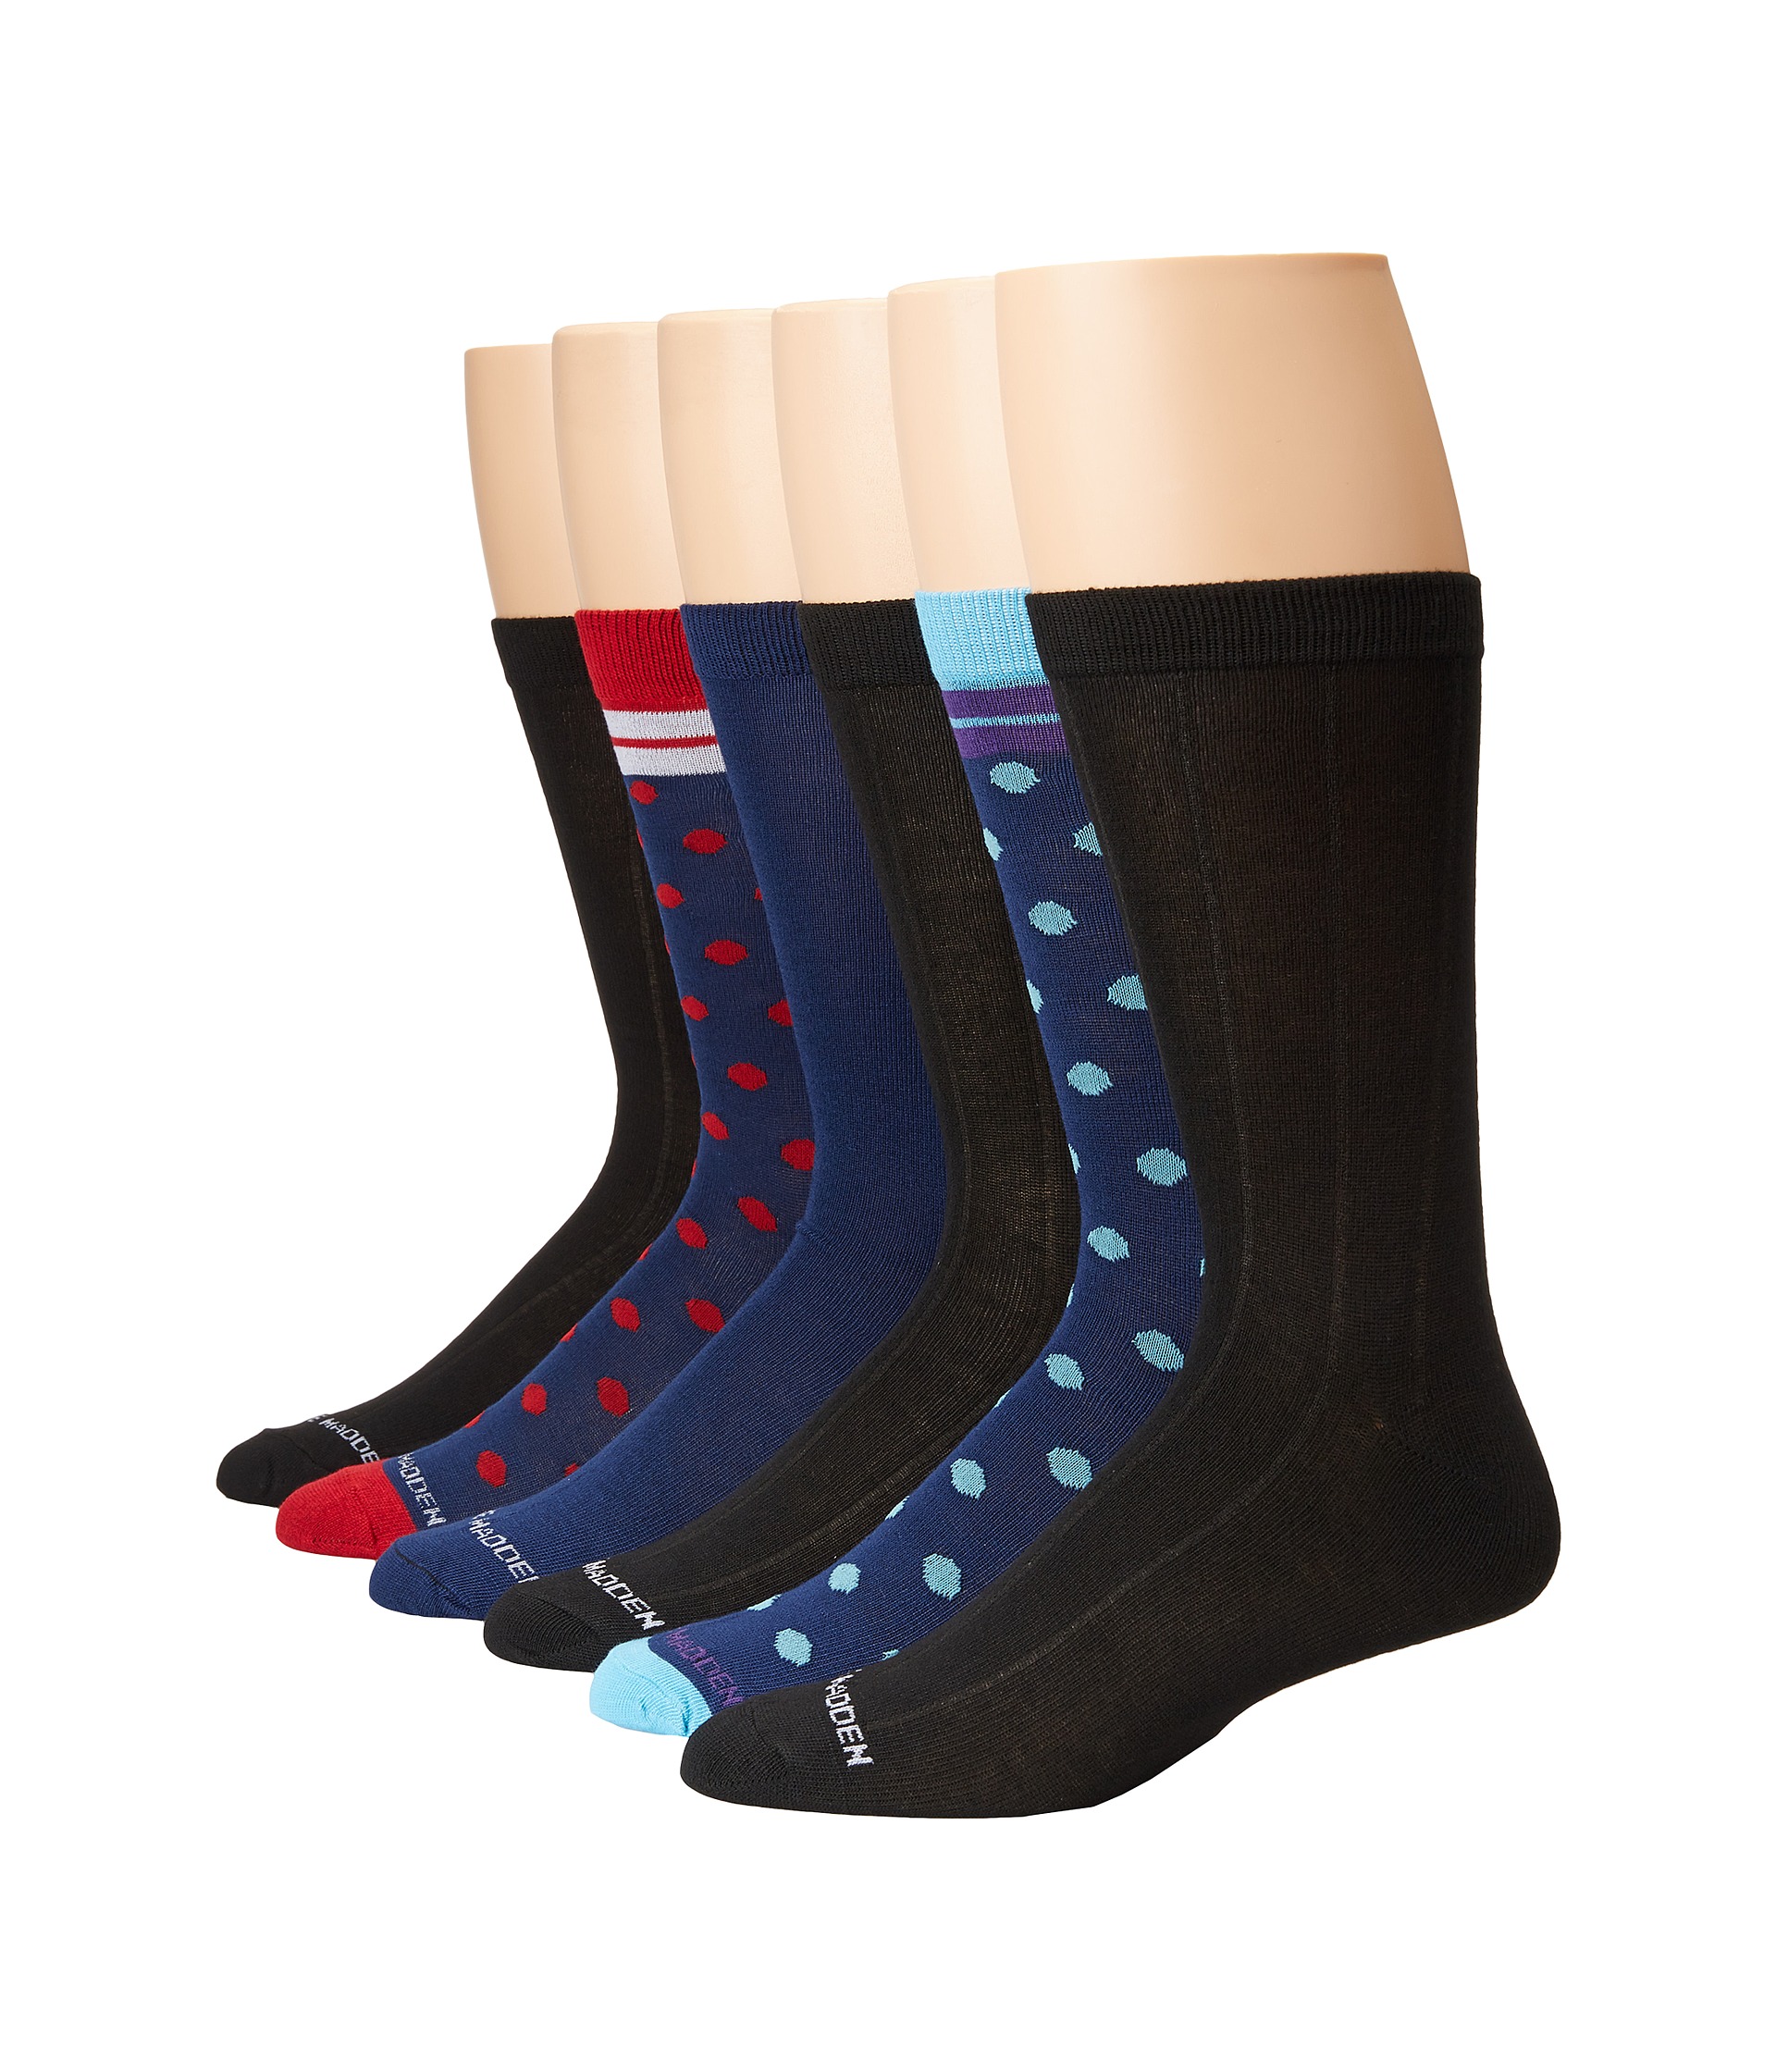 Steve Madden 6-Pack Fashion Crew Socks - Zappos.com Free Shipping BOTH Ways